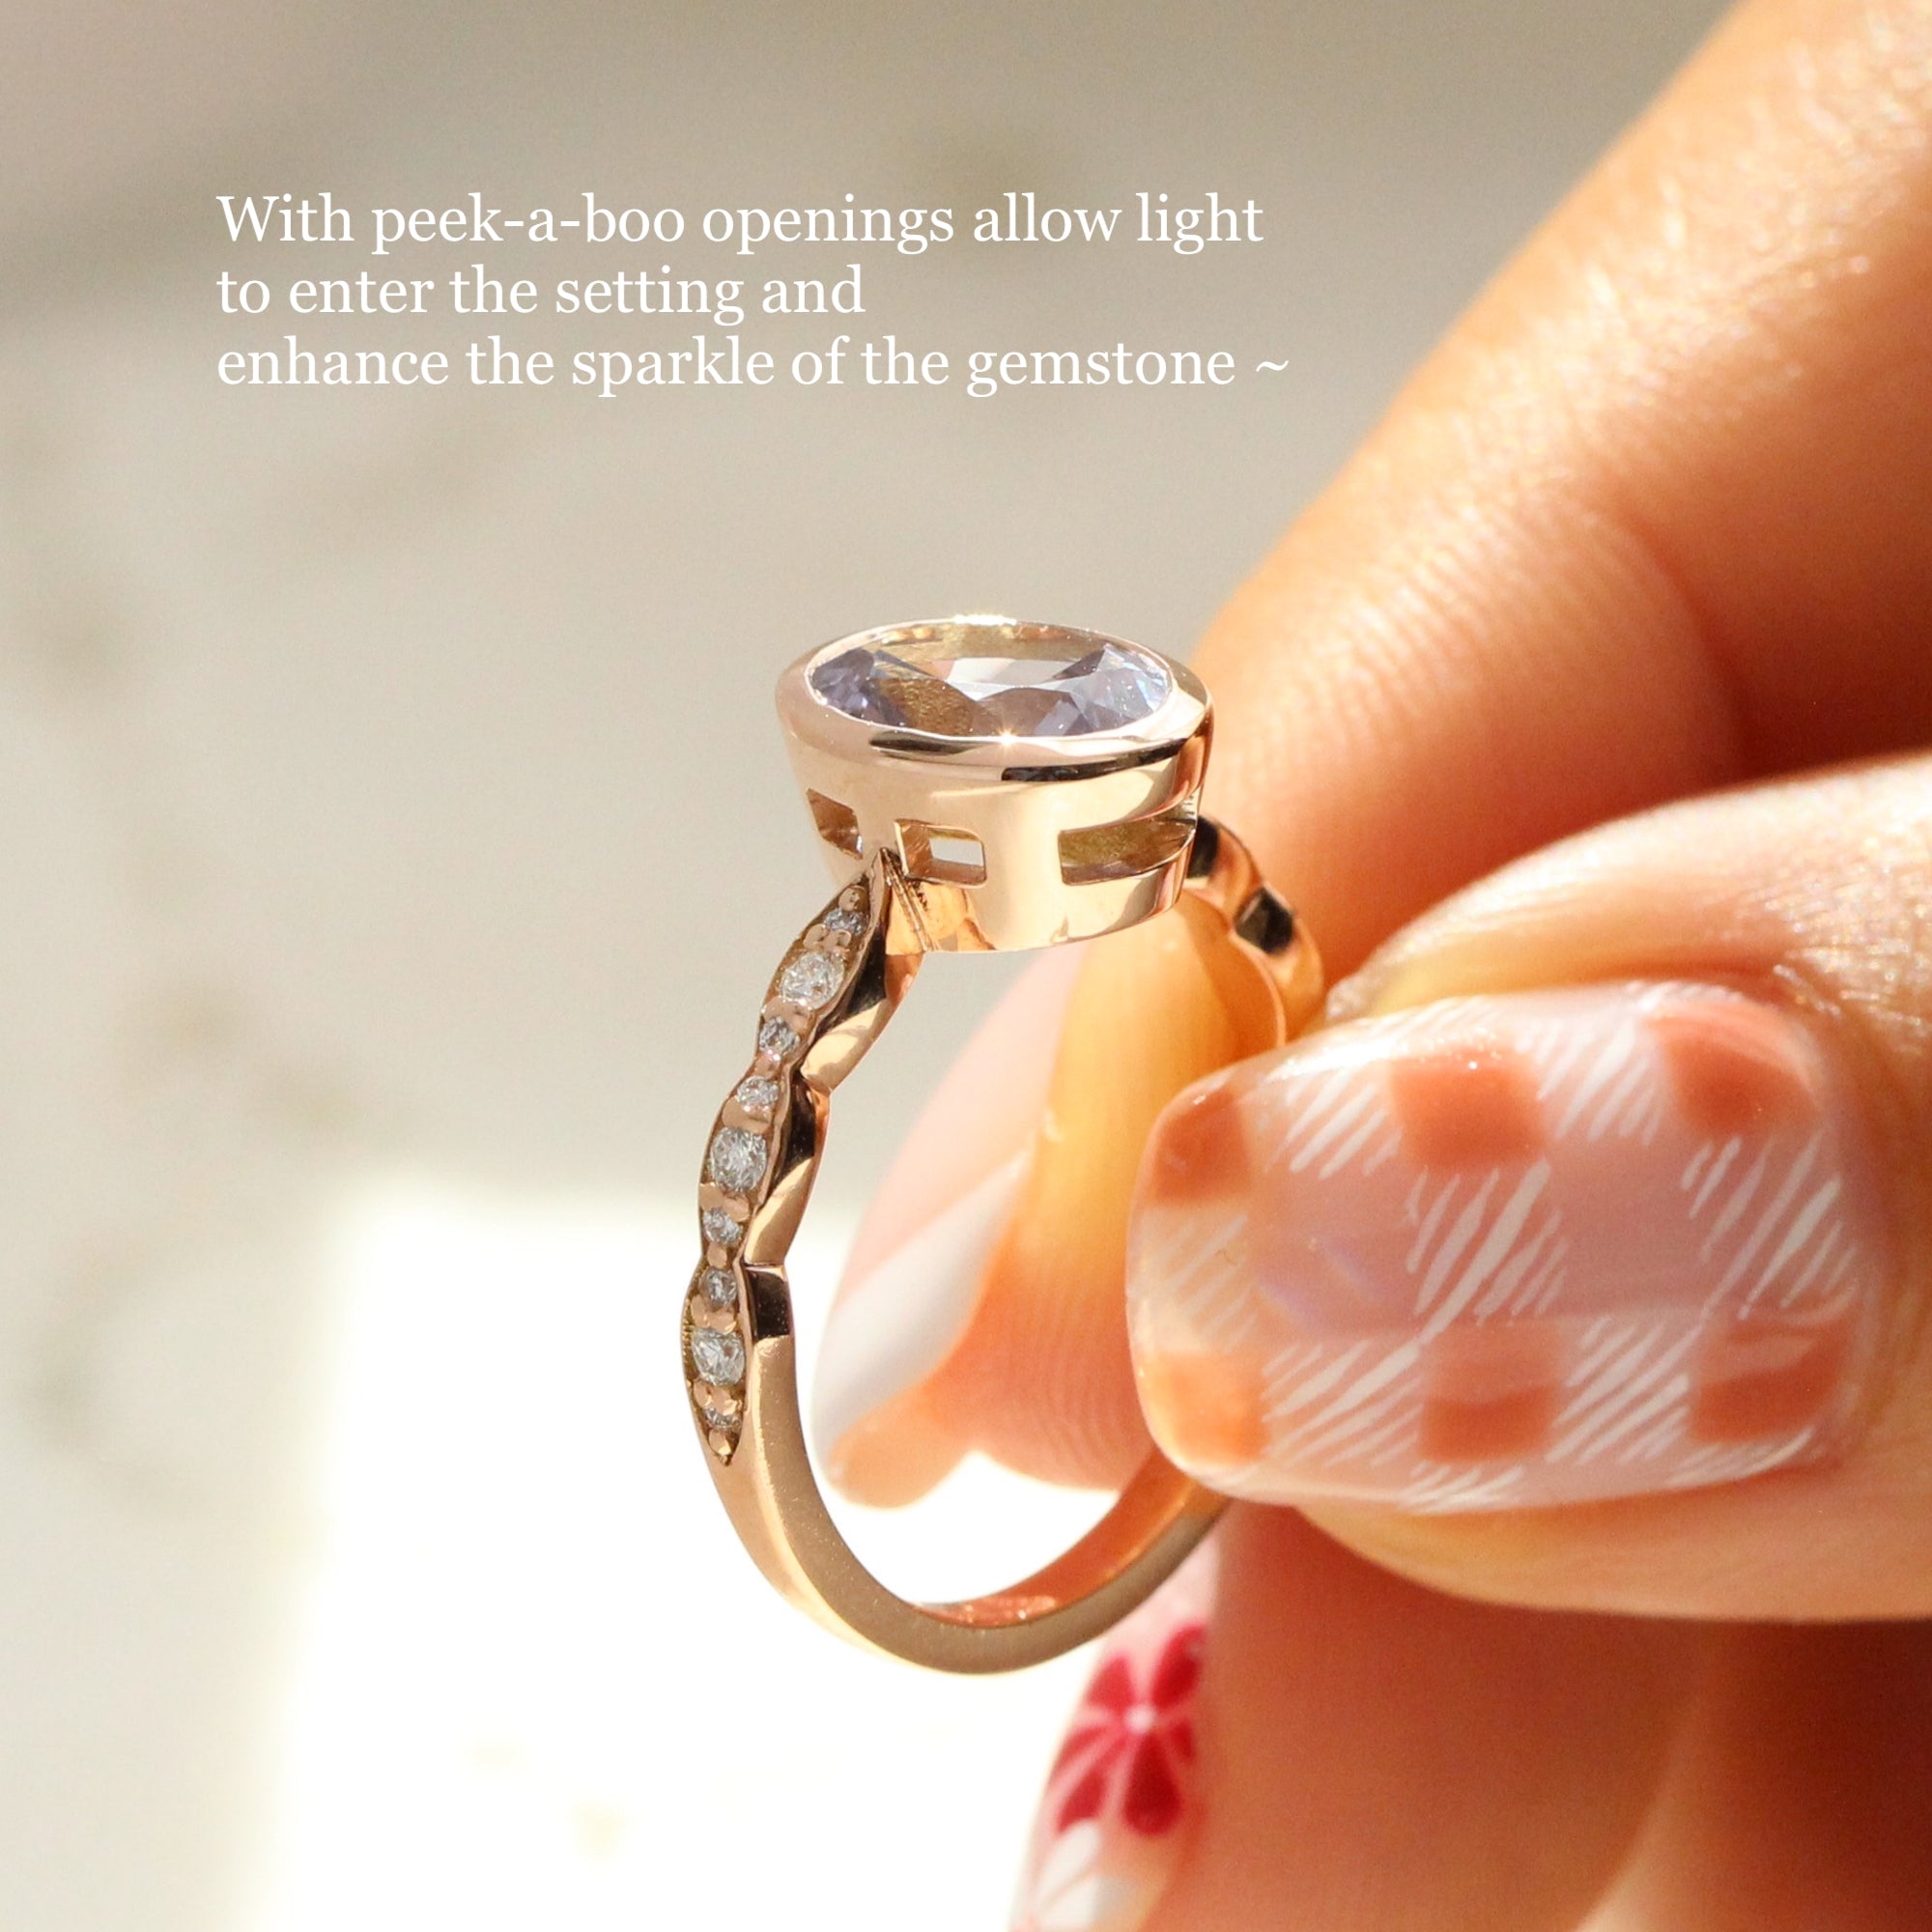 Oval lavender sapphire ring rose gold bezel solitaire scalloped diamond band la more design jewelry